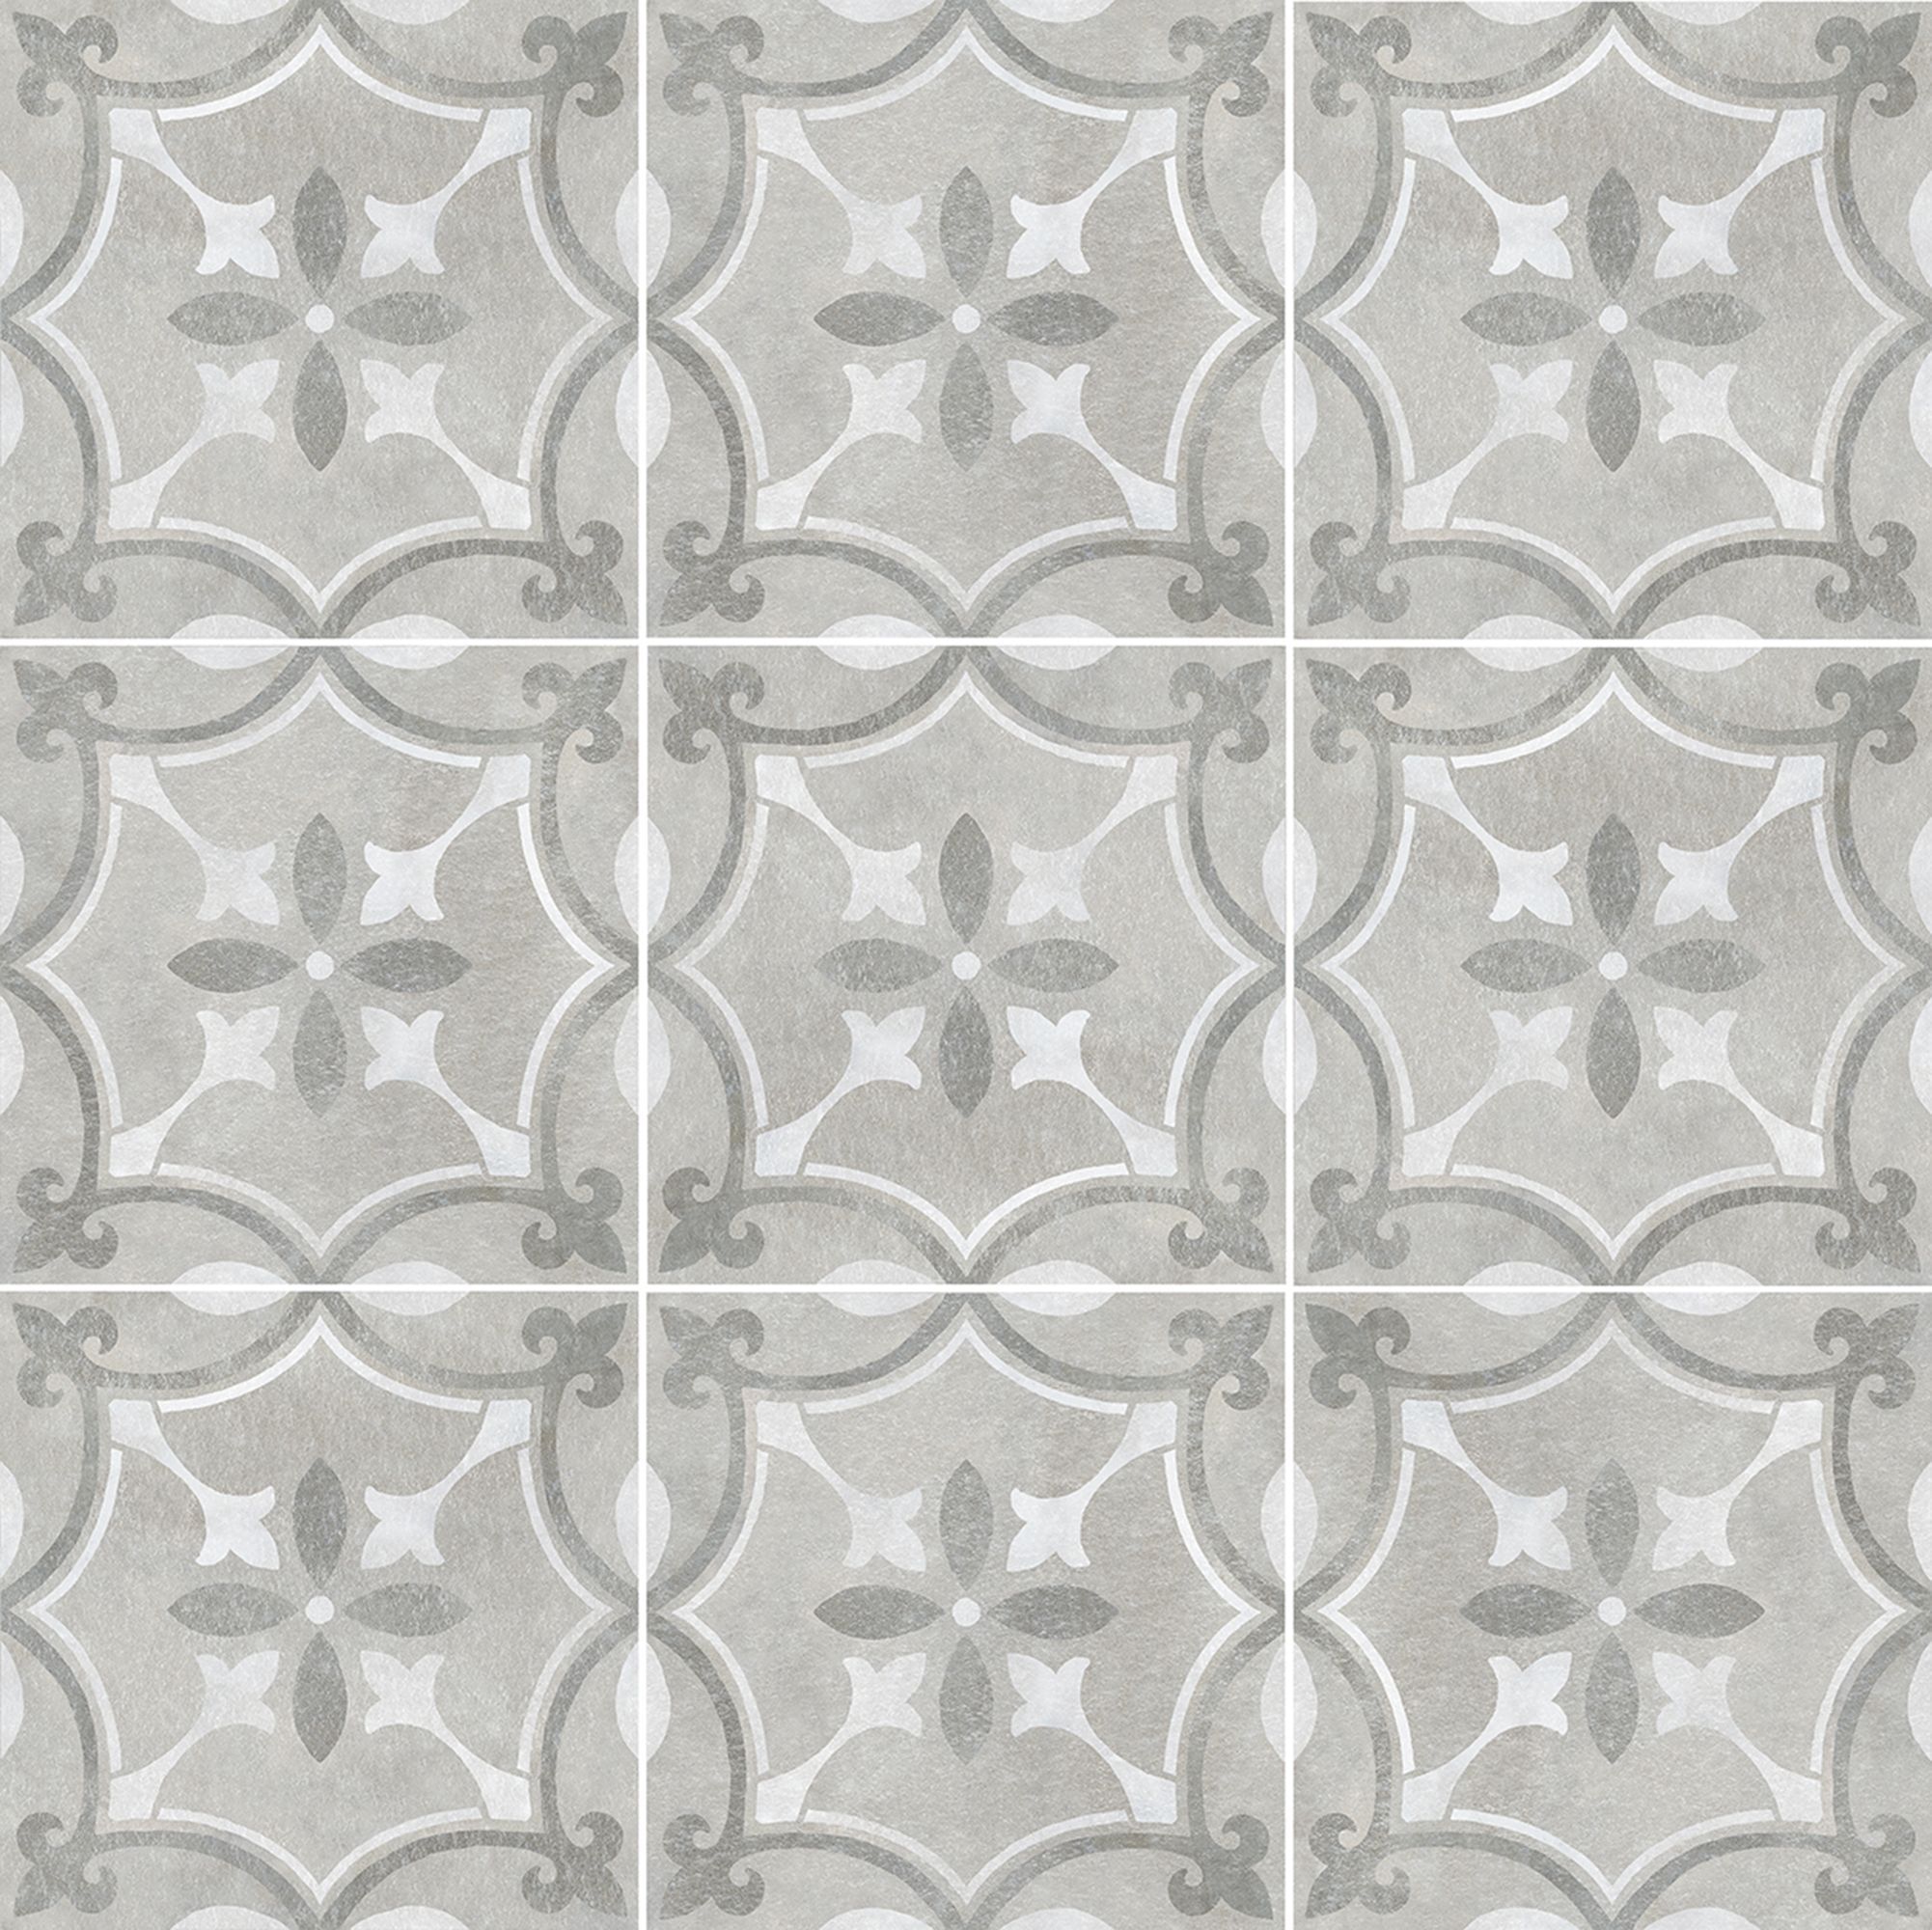 Perla Grey Matt Patterned Stone effect Ceramic Wall & floor Tile, Pack of 9, (L)330mm (W)330mm